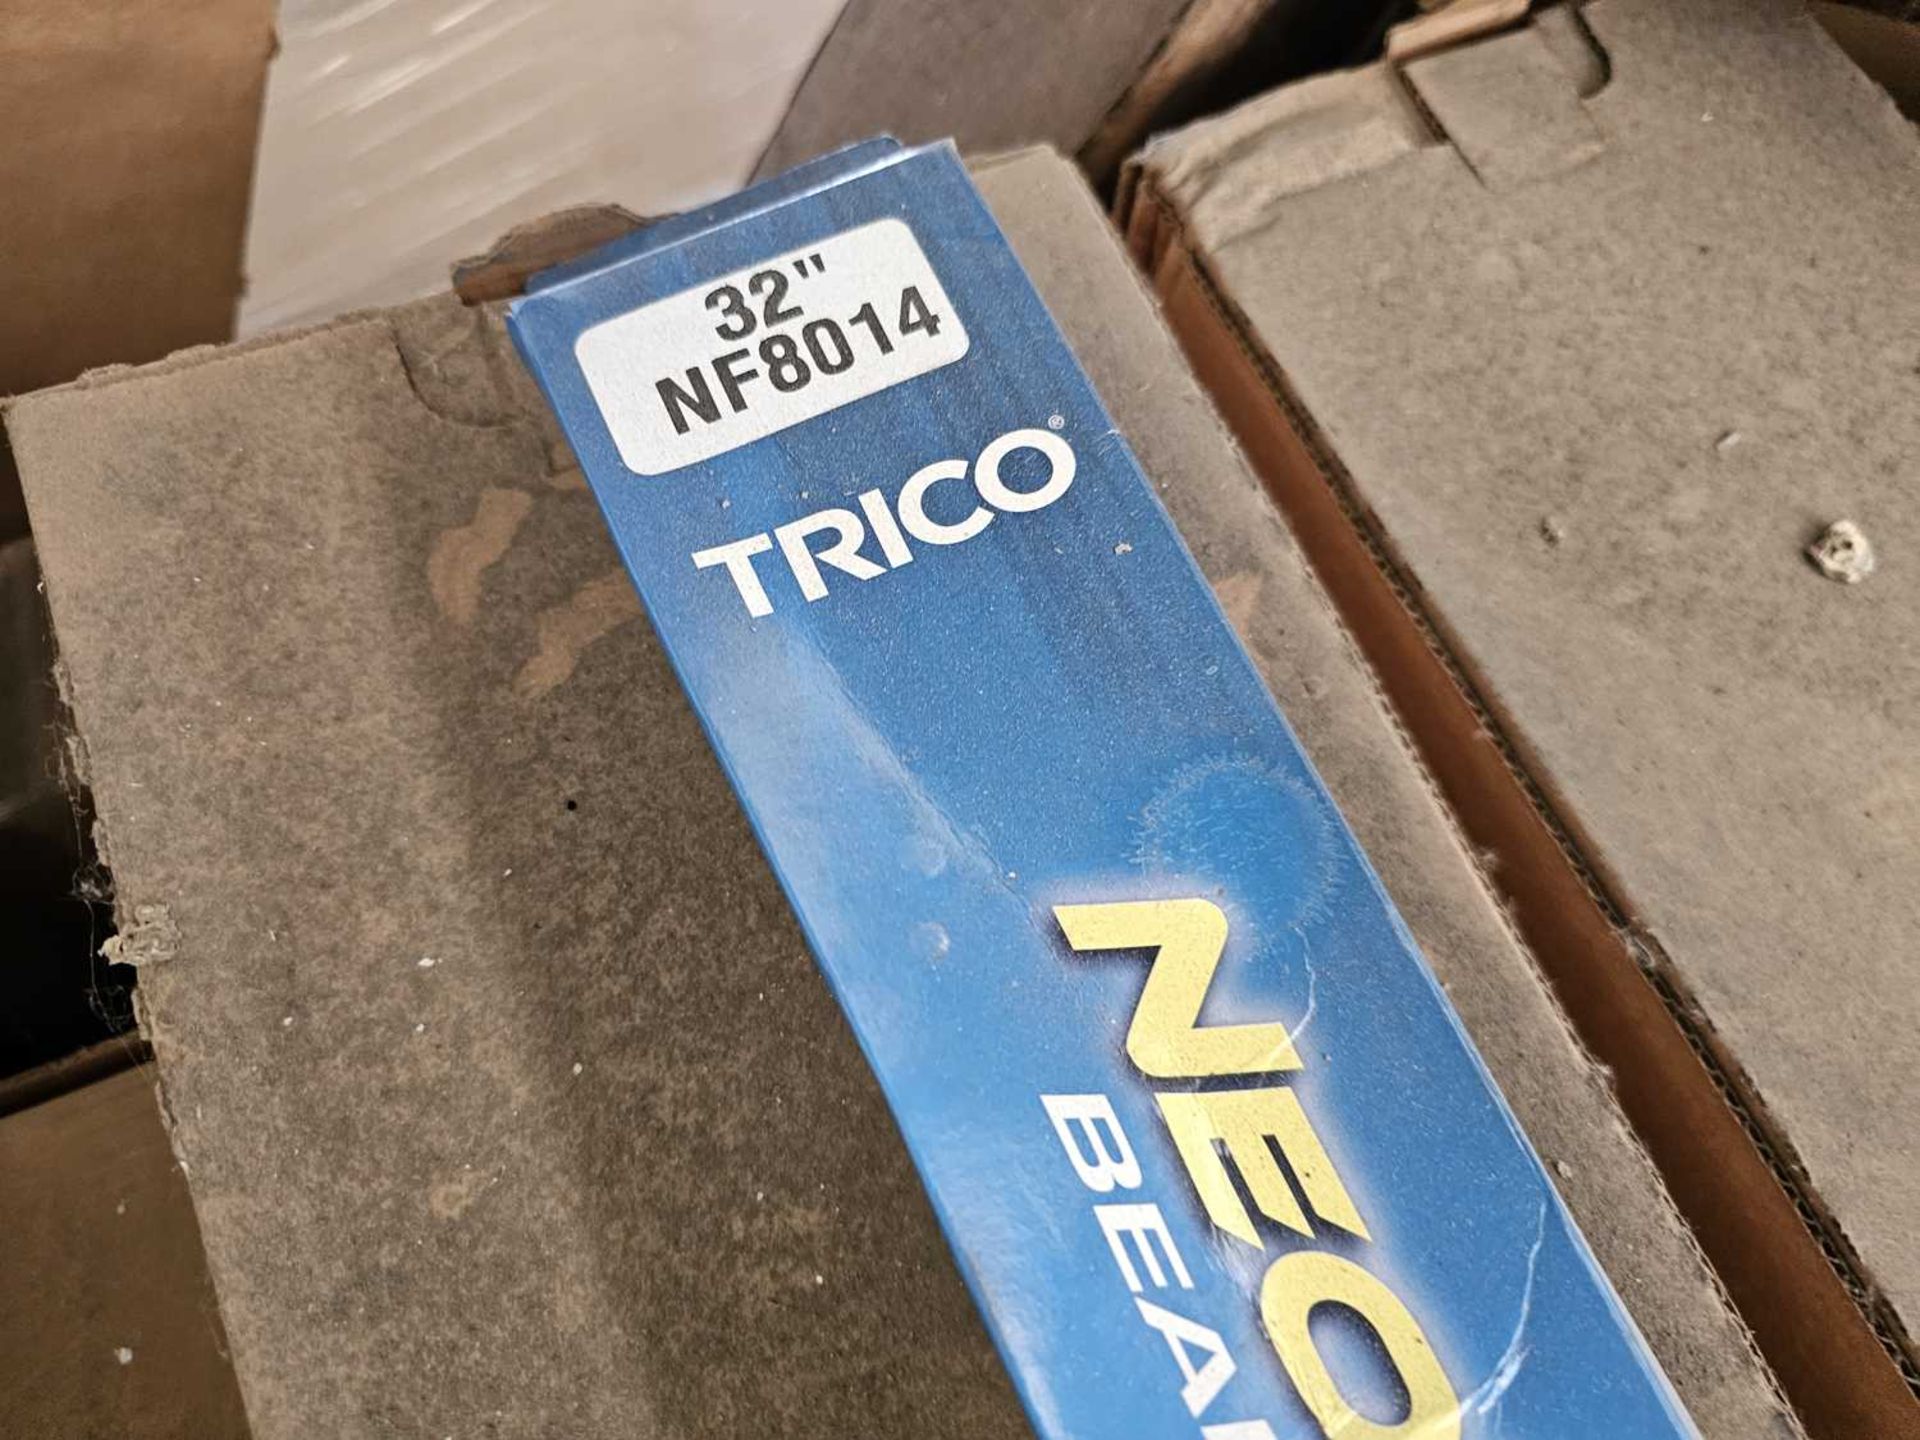 Unused Pallet of Trico NF8014 Window Wiper (32") - Image 2 of 3